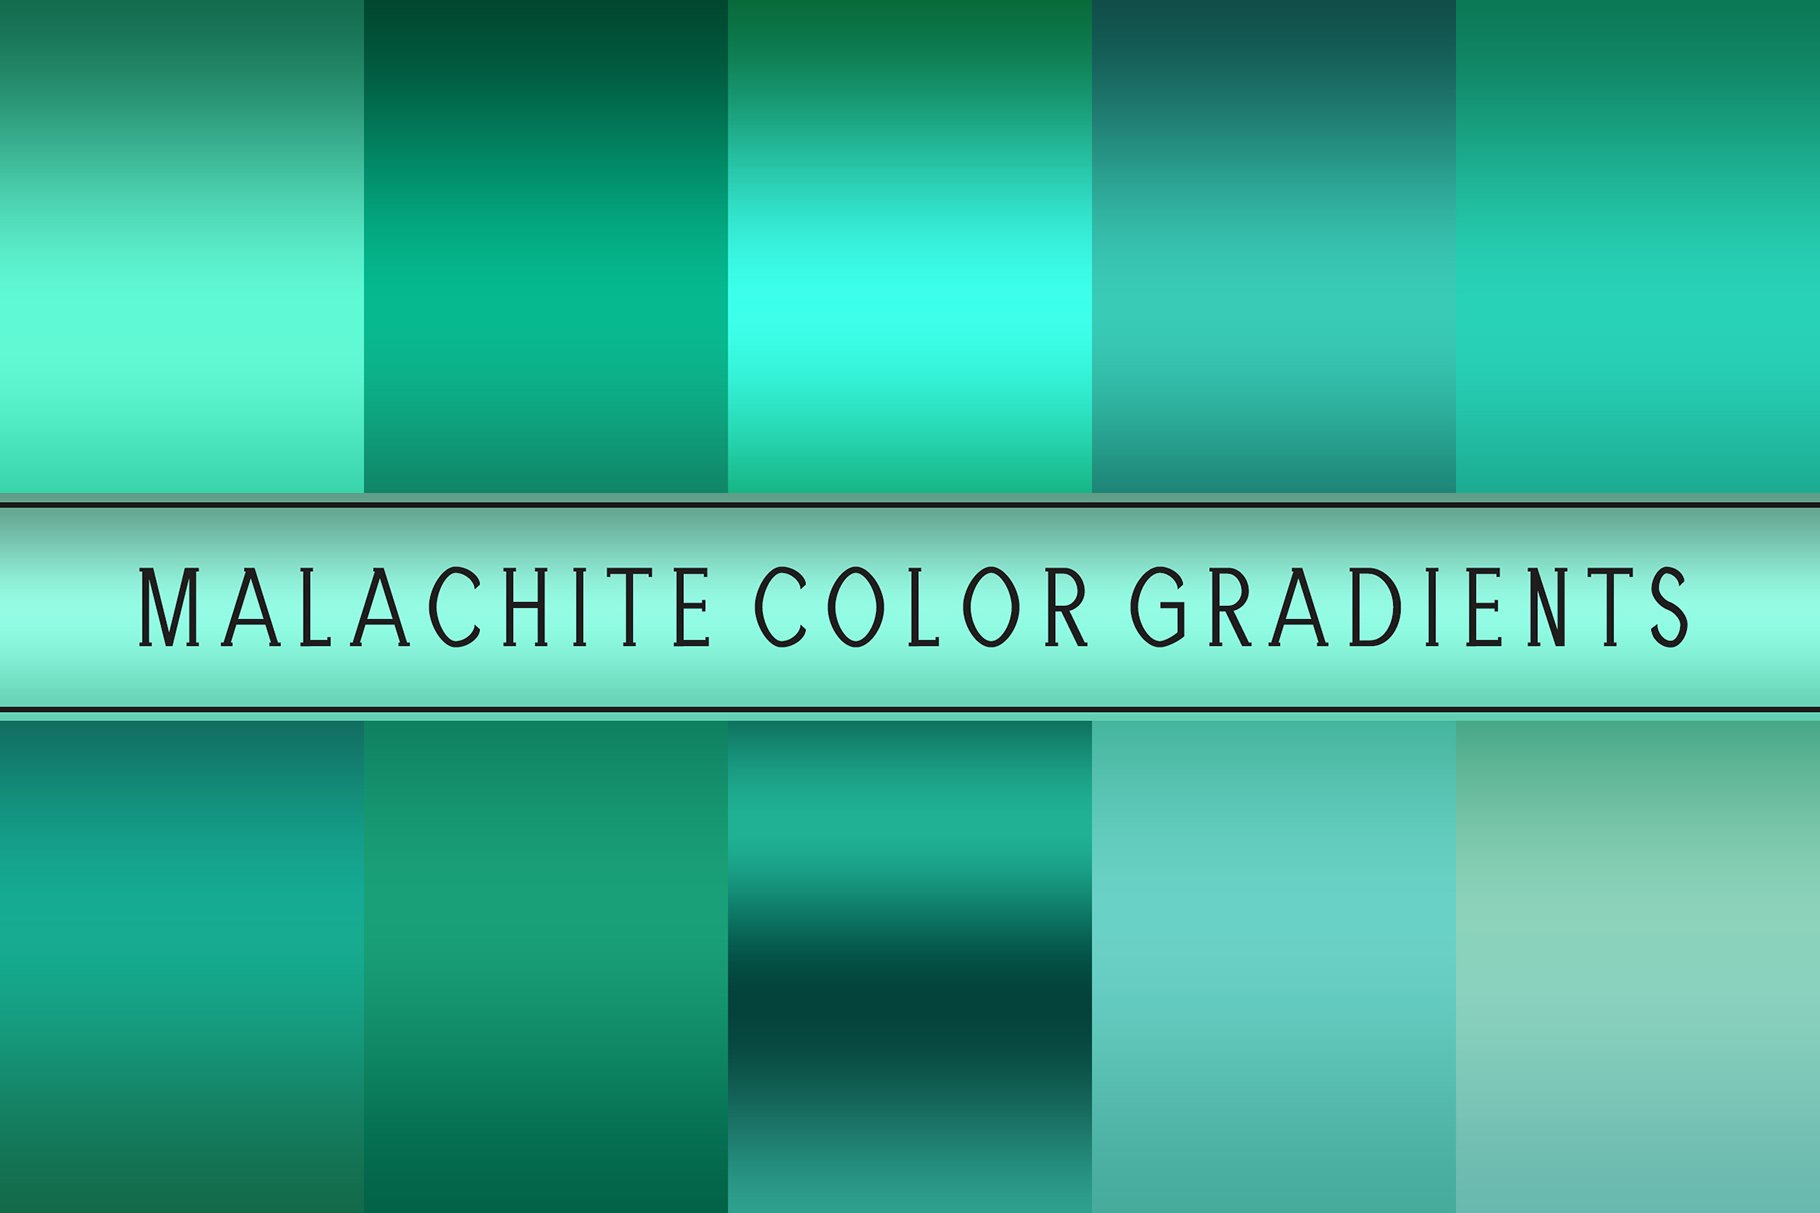 Malachite Color Gradientscover image.